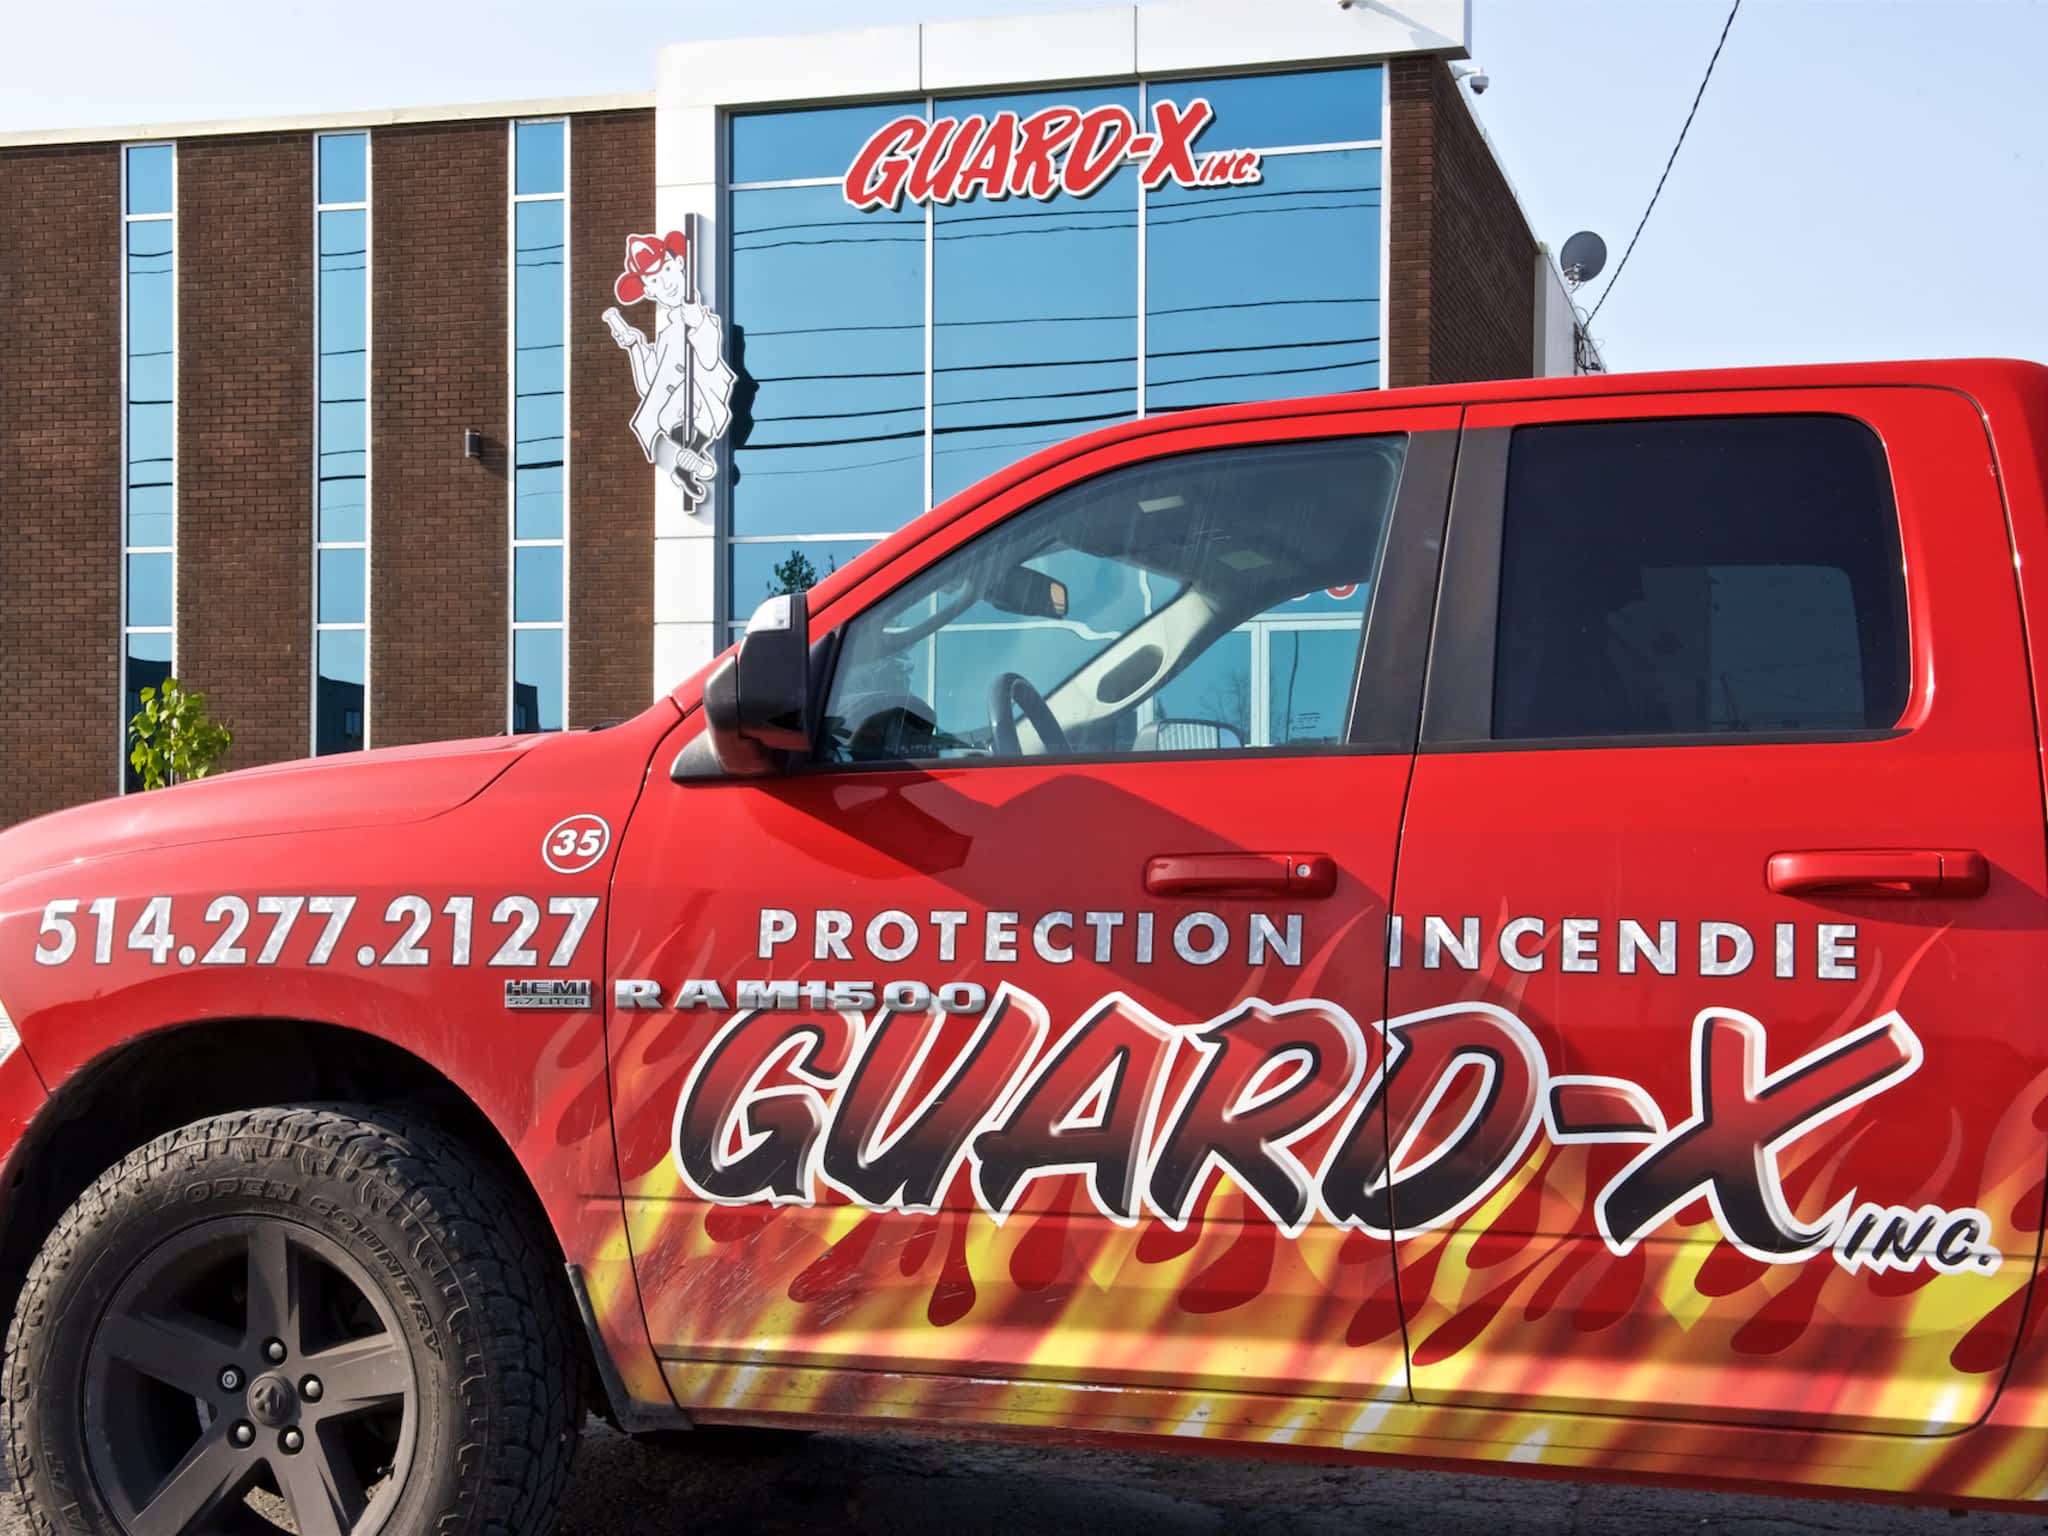 photo Guard-X Inc